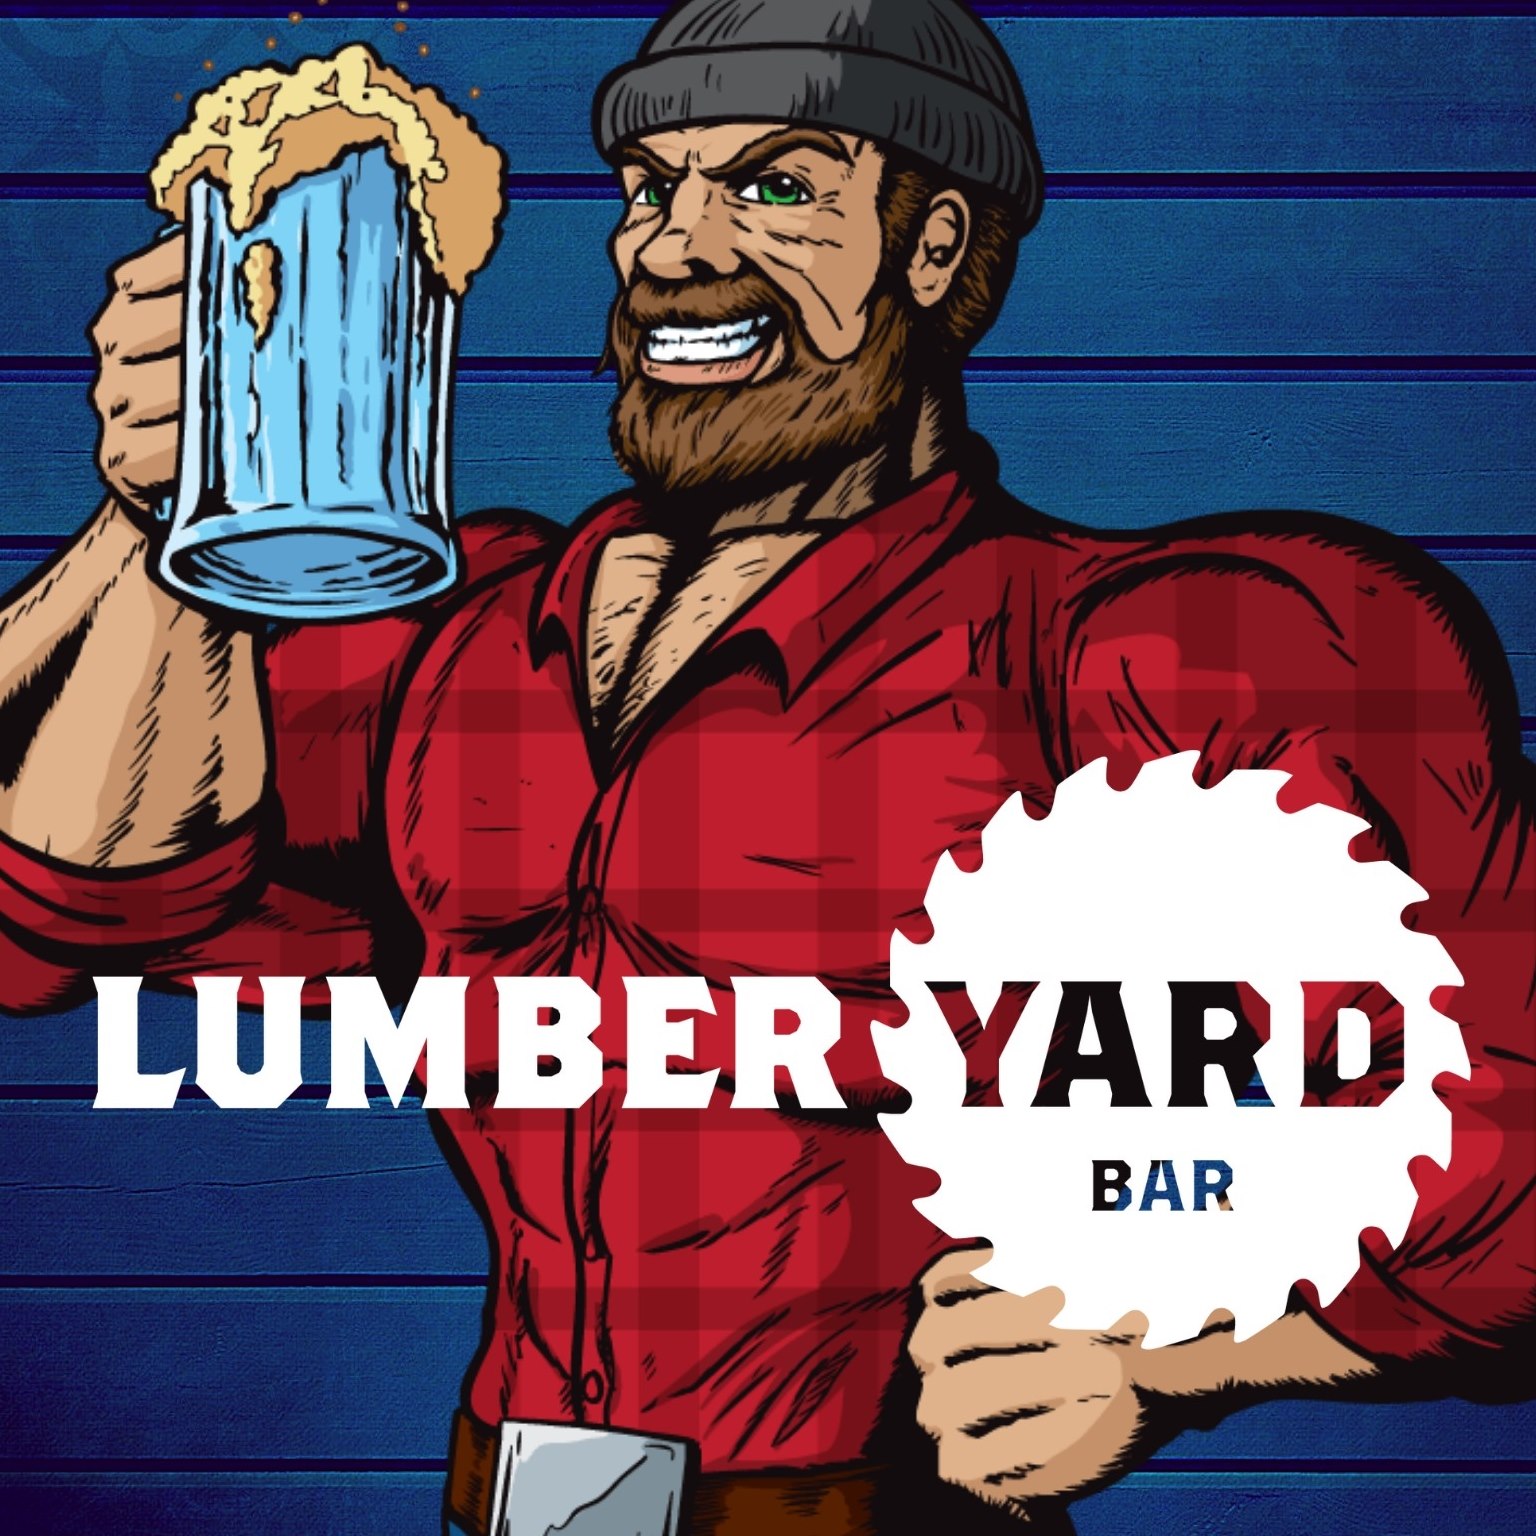 Company logo of The Lumber Yard Bar